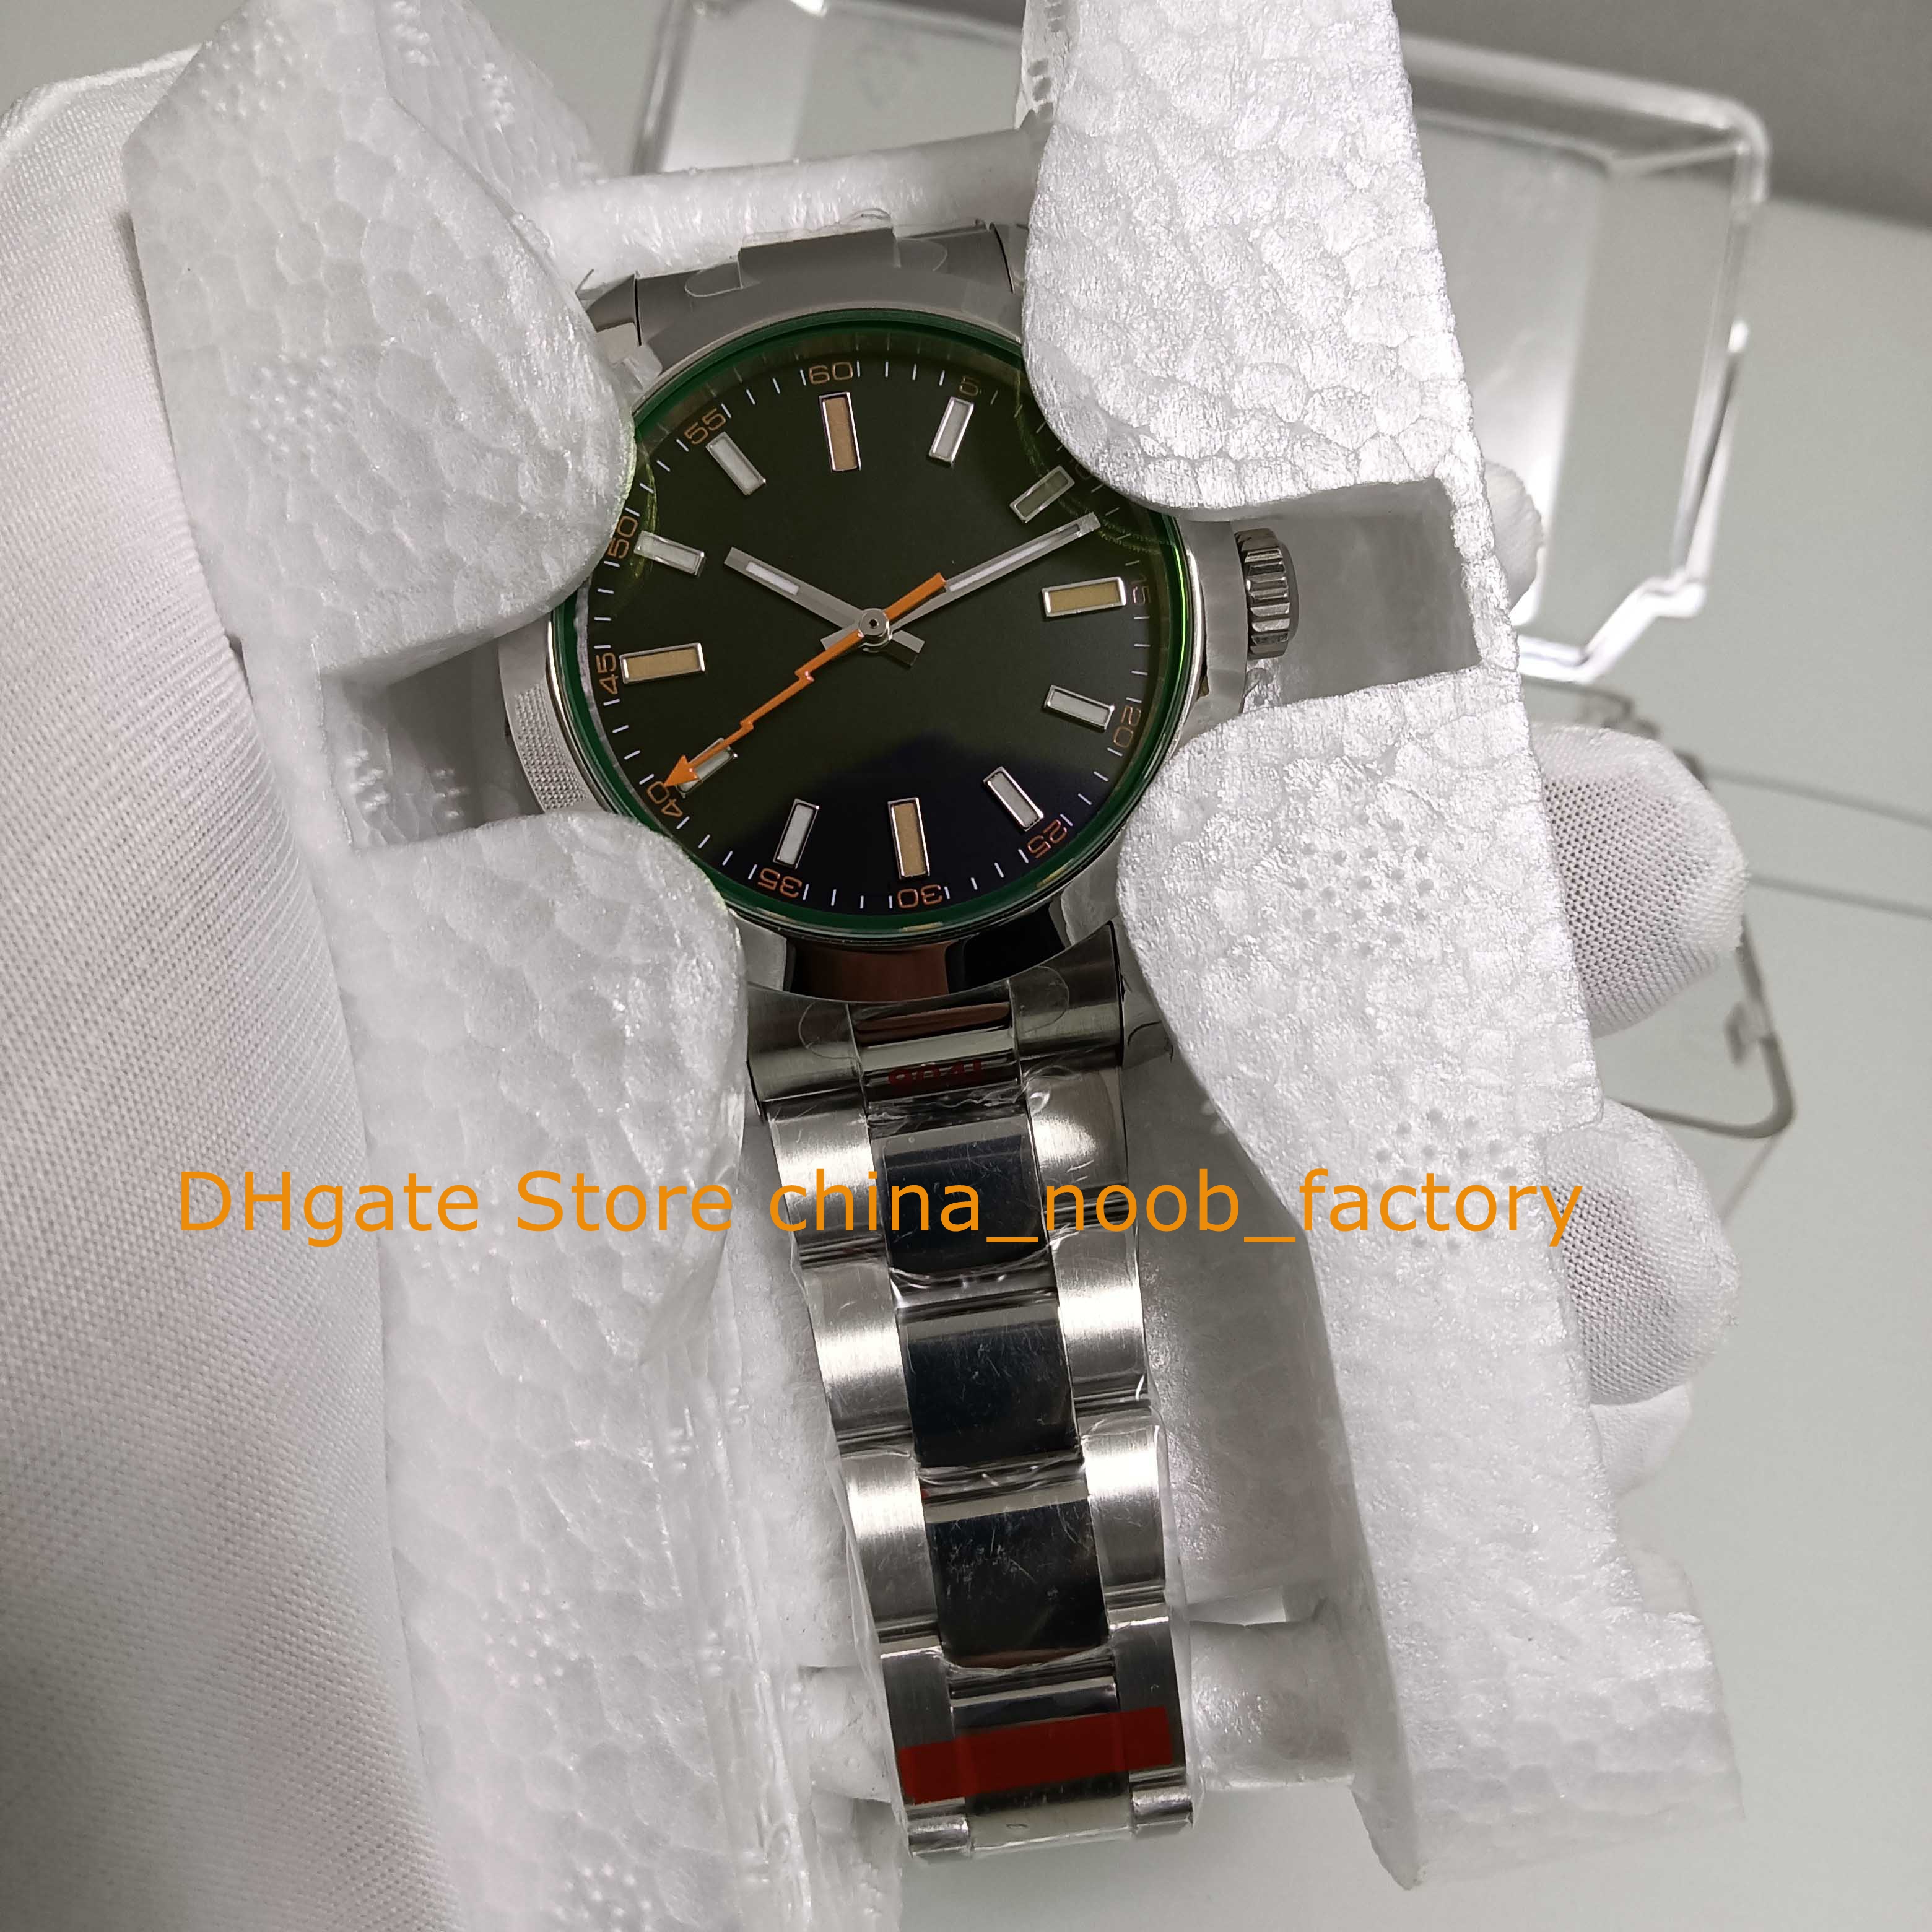 2 Estilo Autom￡tico Reloj Cristal verde de 40 mm a mano naranja dial negro luminoso 904L pulsera de acero gmf cal.3131 relojes de movimiento